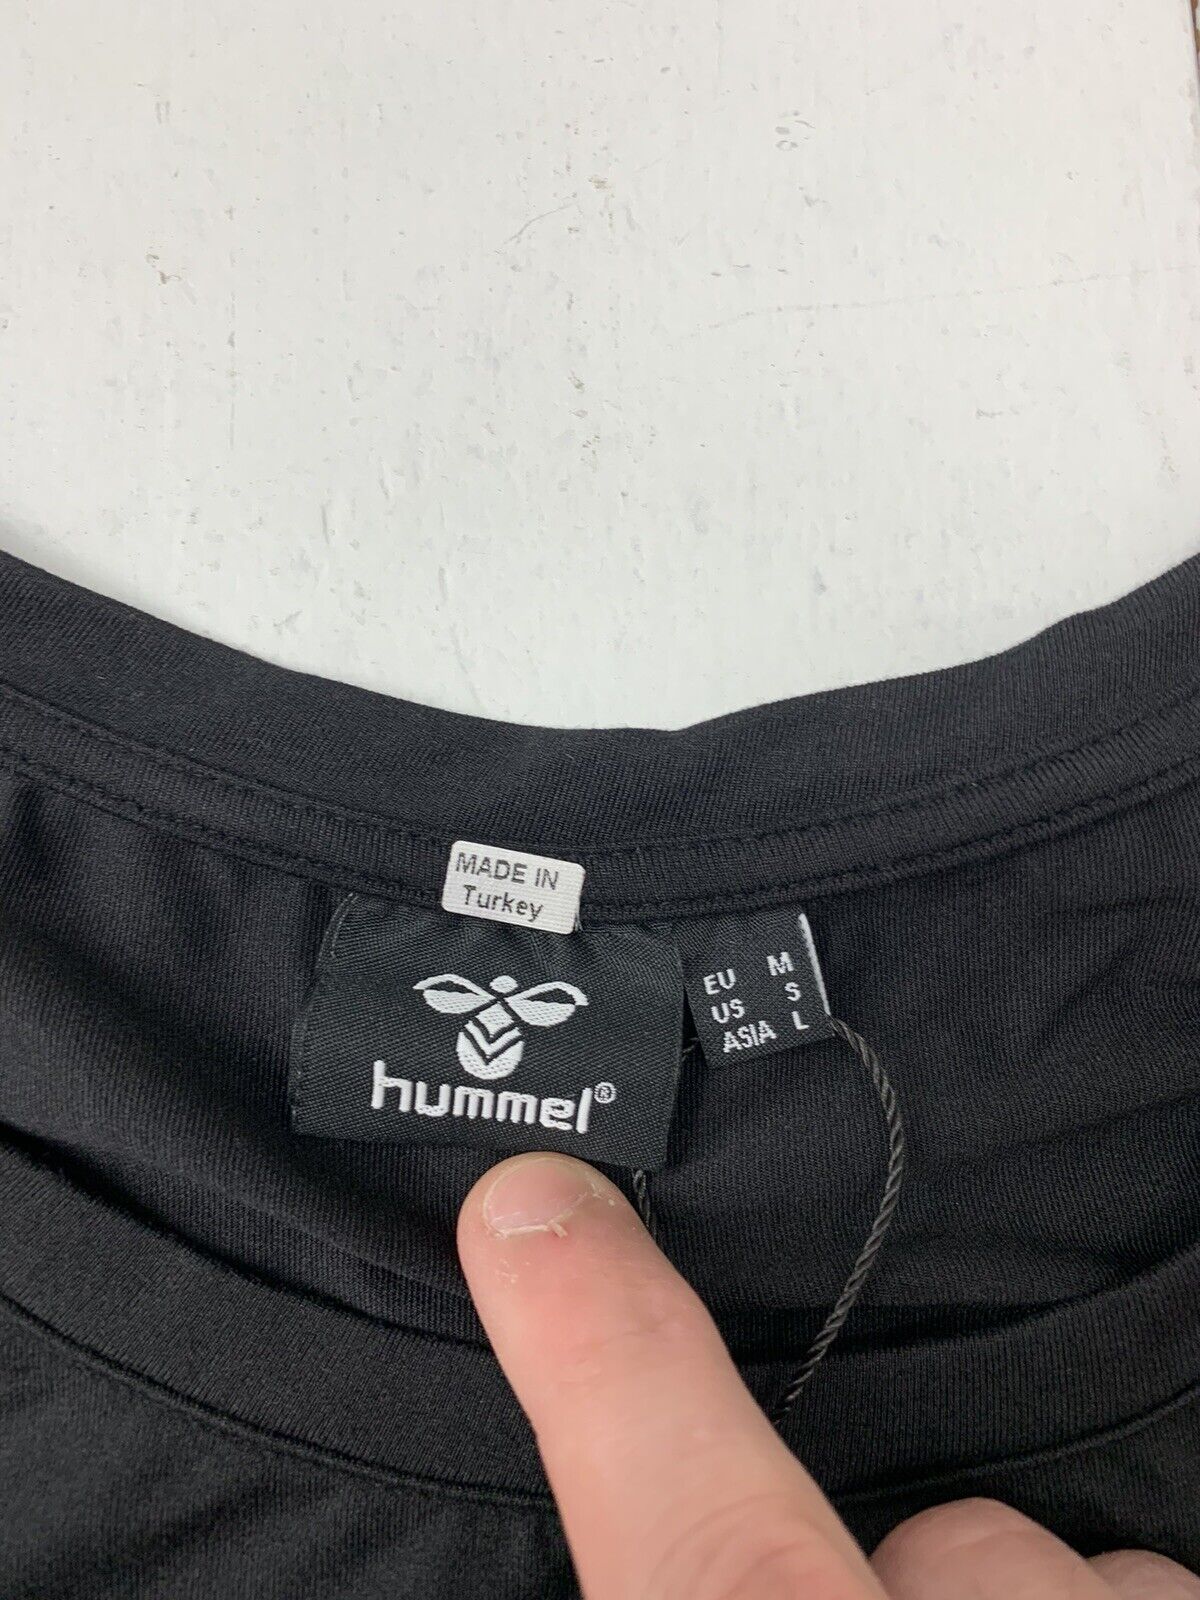 Hummel Mens Virgil Black T Shirt Size Medium New - beyond exchange